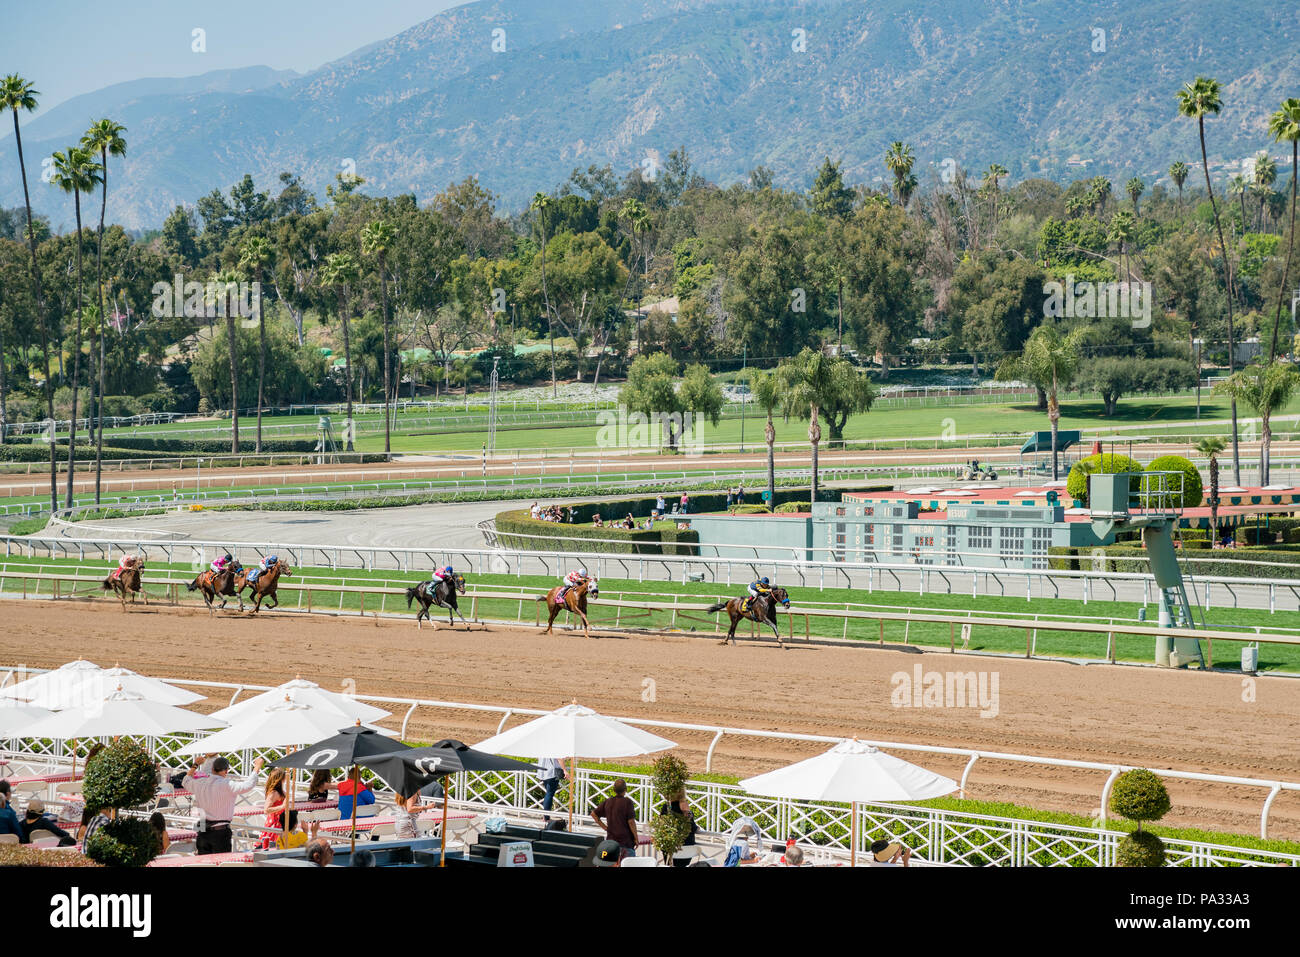 Los Angeles, APR 8: Horse racing in Santa Anita Park on APR 8, 2018 at ...